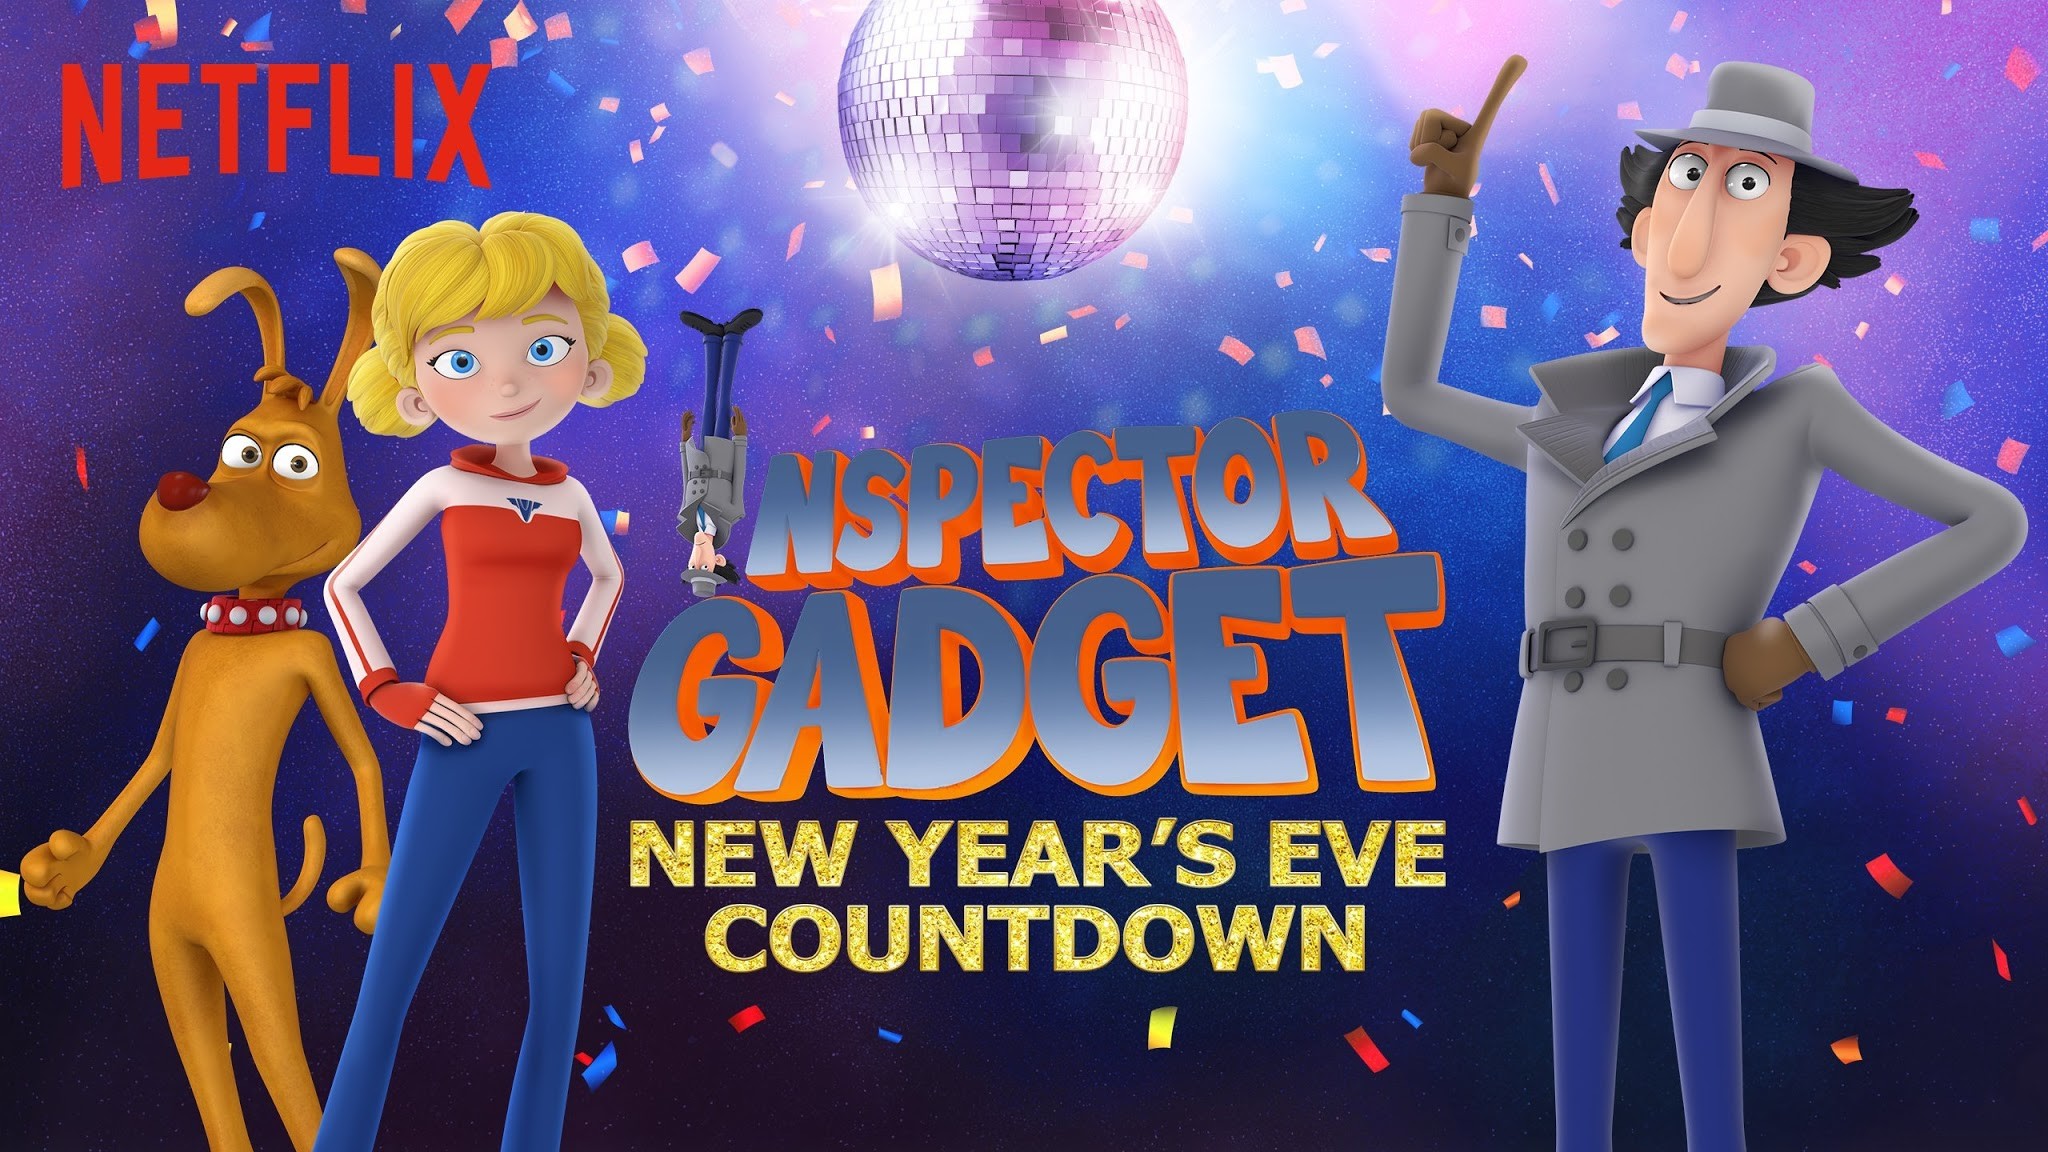 2048x1152 Netflix Launches Inspector Gadget "New Year's Eve Countdown" Short